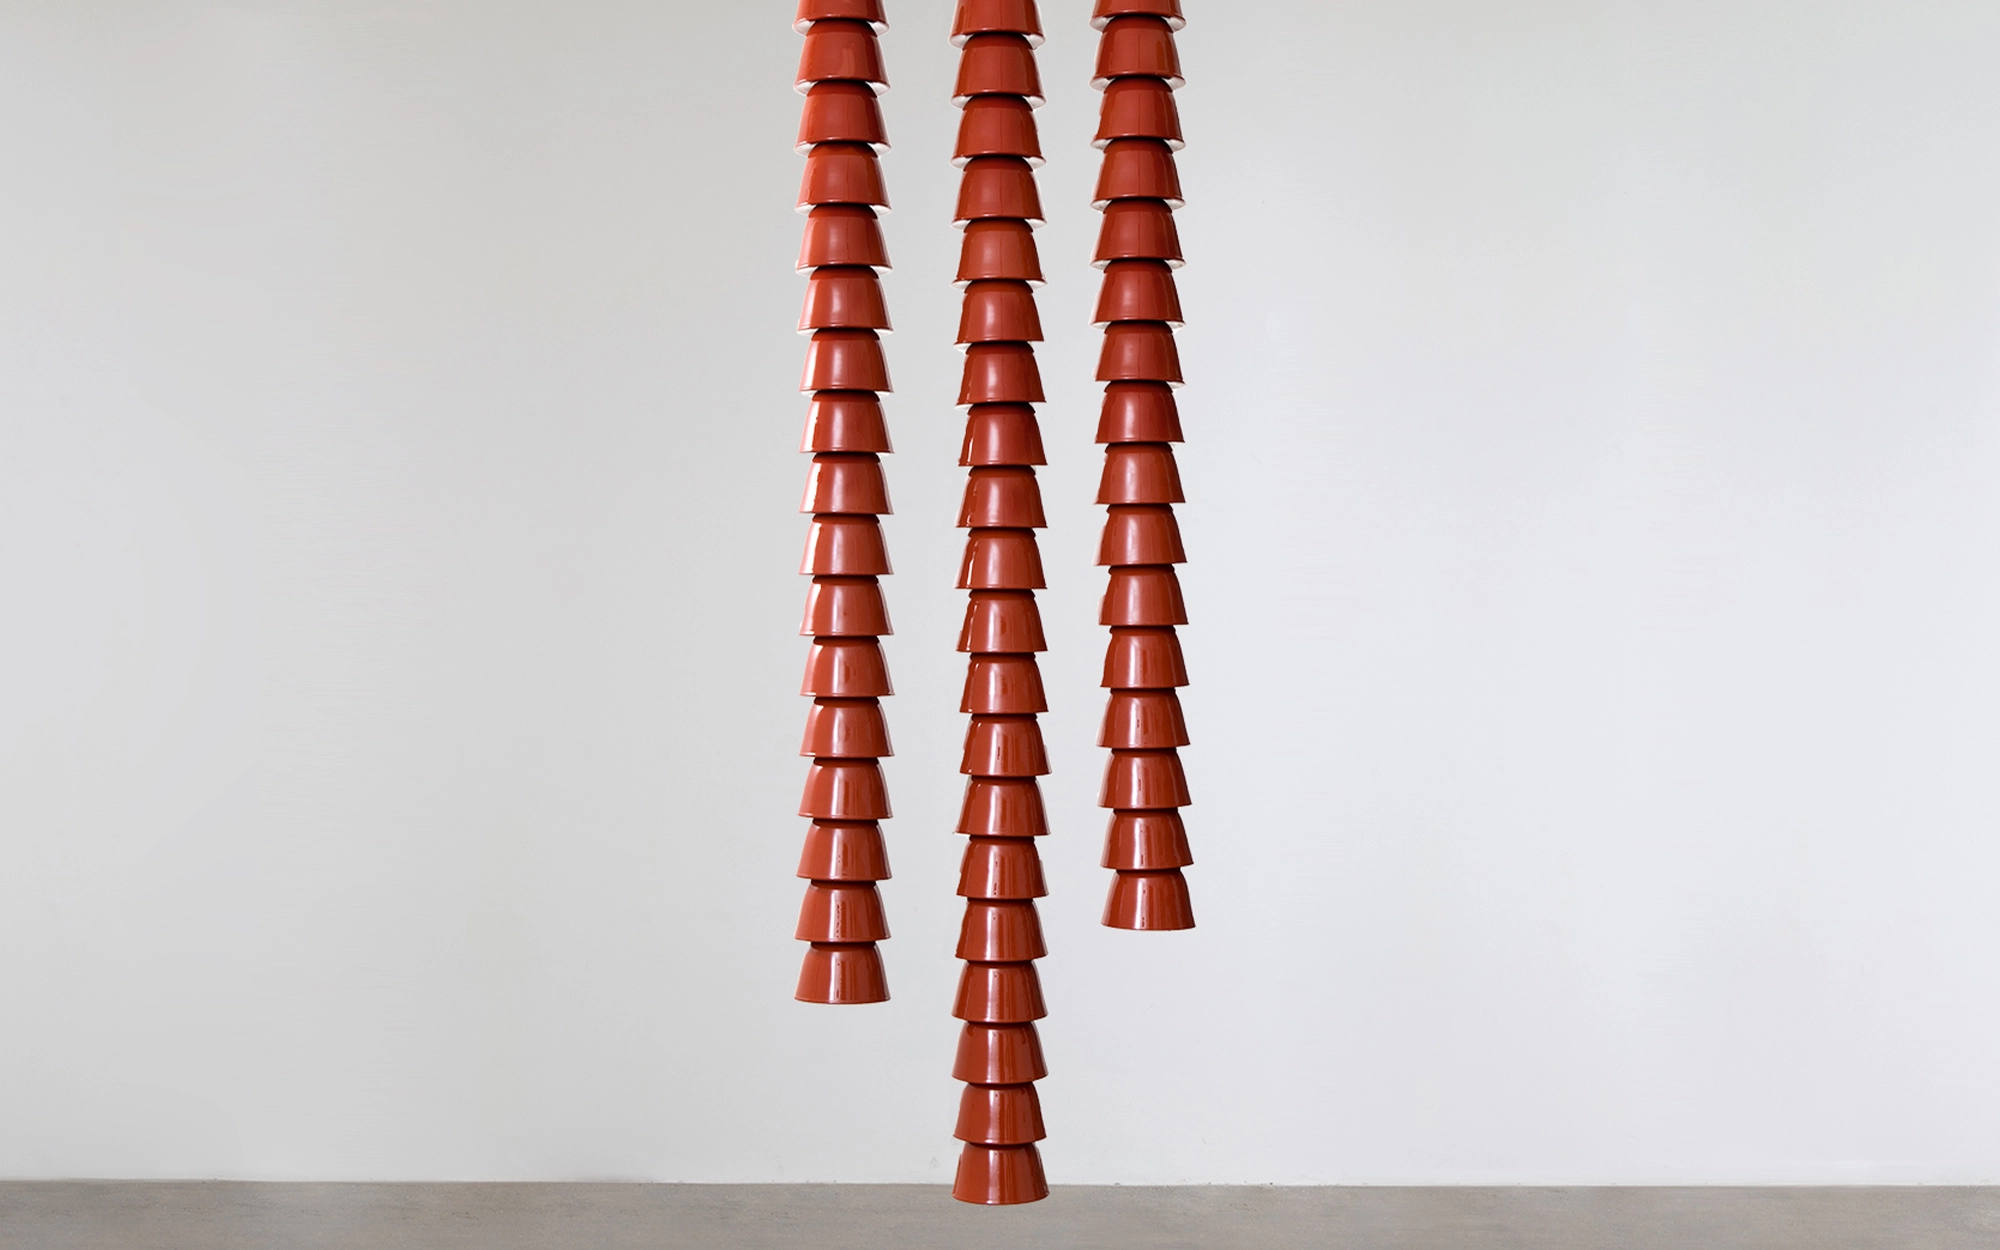 Chaînes Ceramic Multiple - Ronan and Erwan Bouroullec - Lucas Ratton x kamel mennour x Galerie kreo @Saint-Tropez.